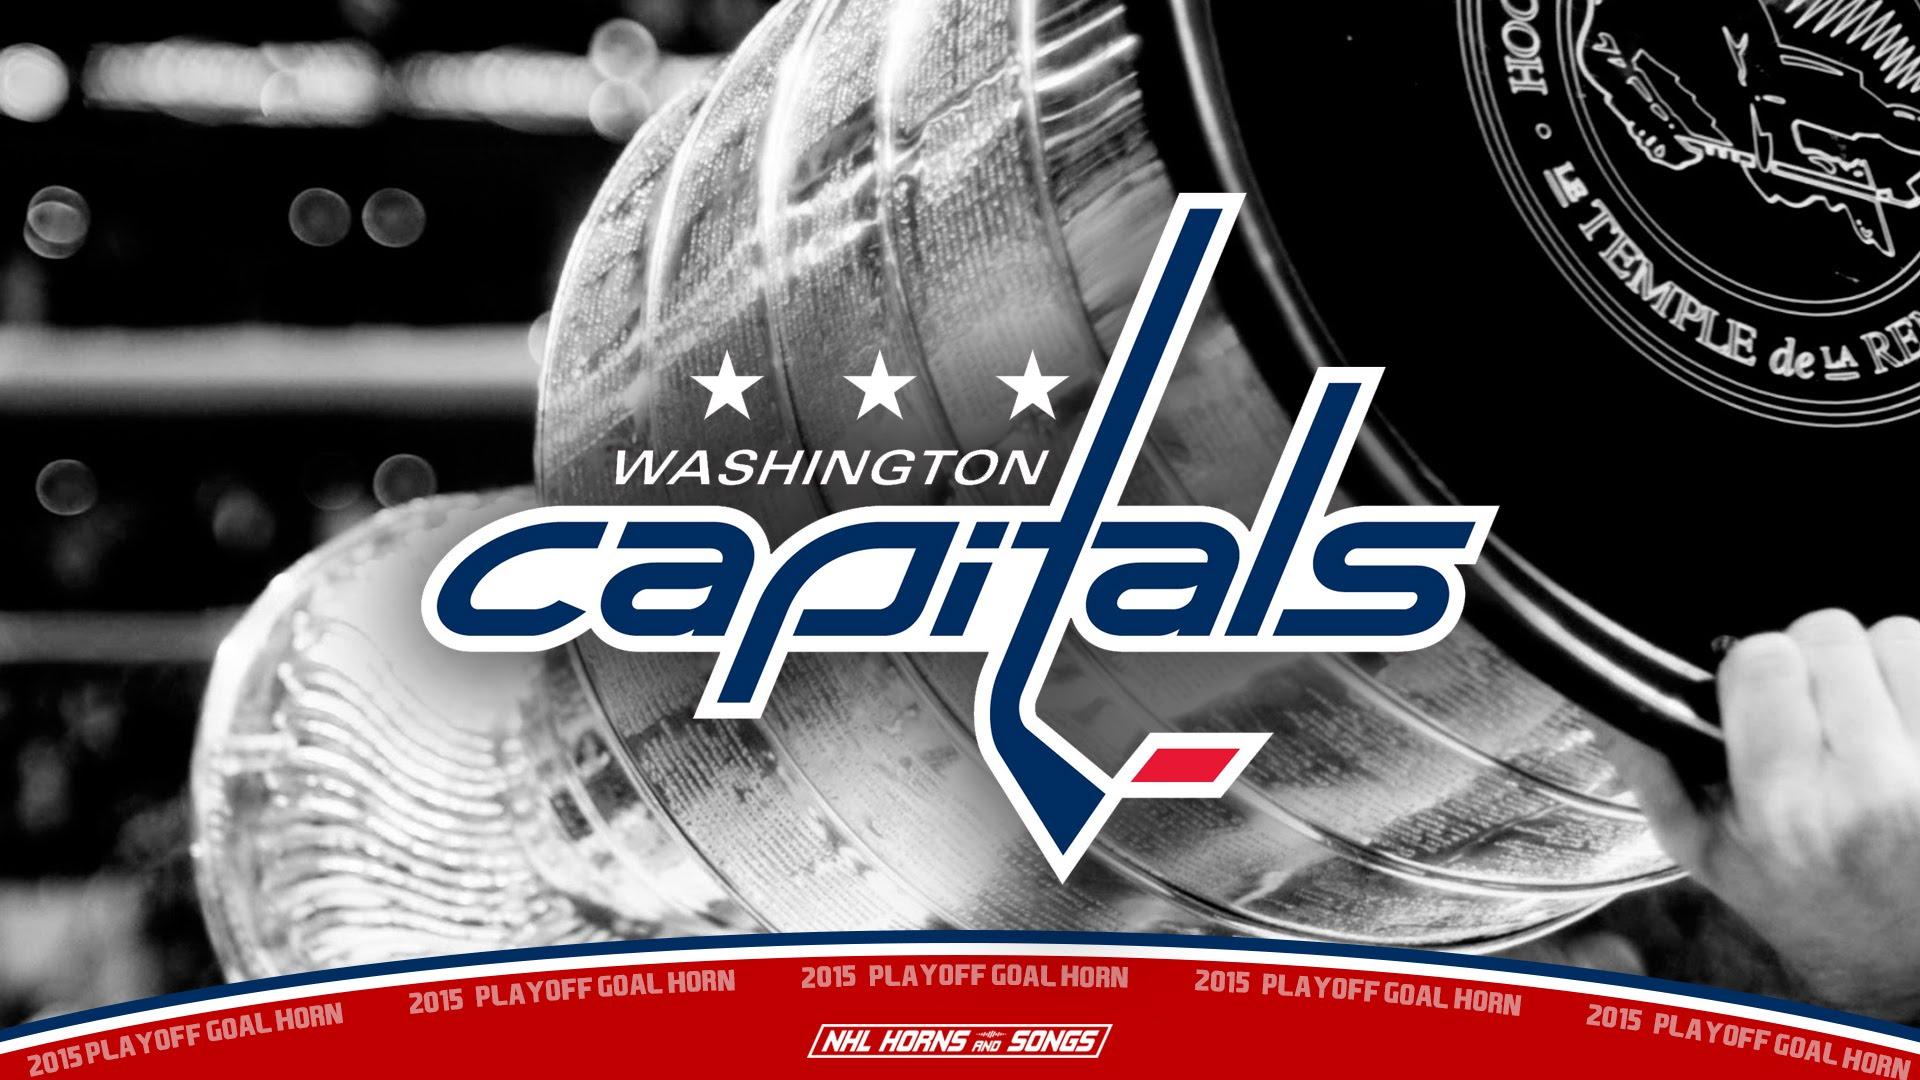 Washington Capitals Wallpapers - Top Free Washington Capitals